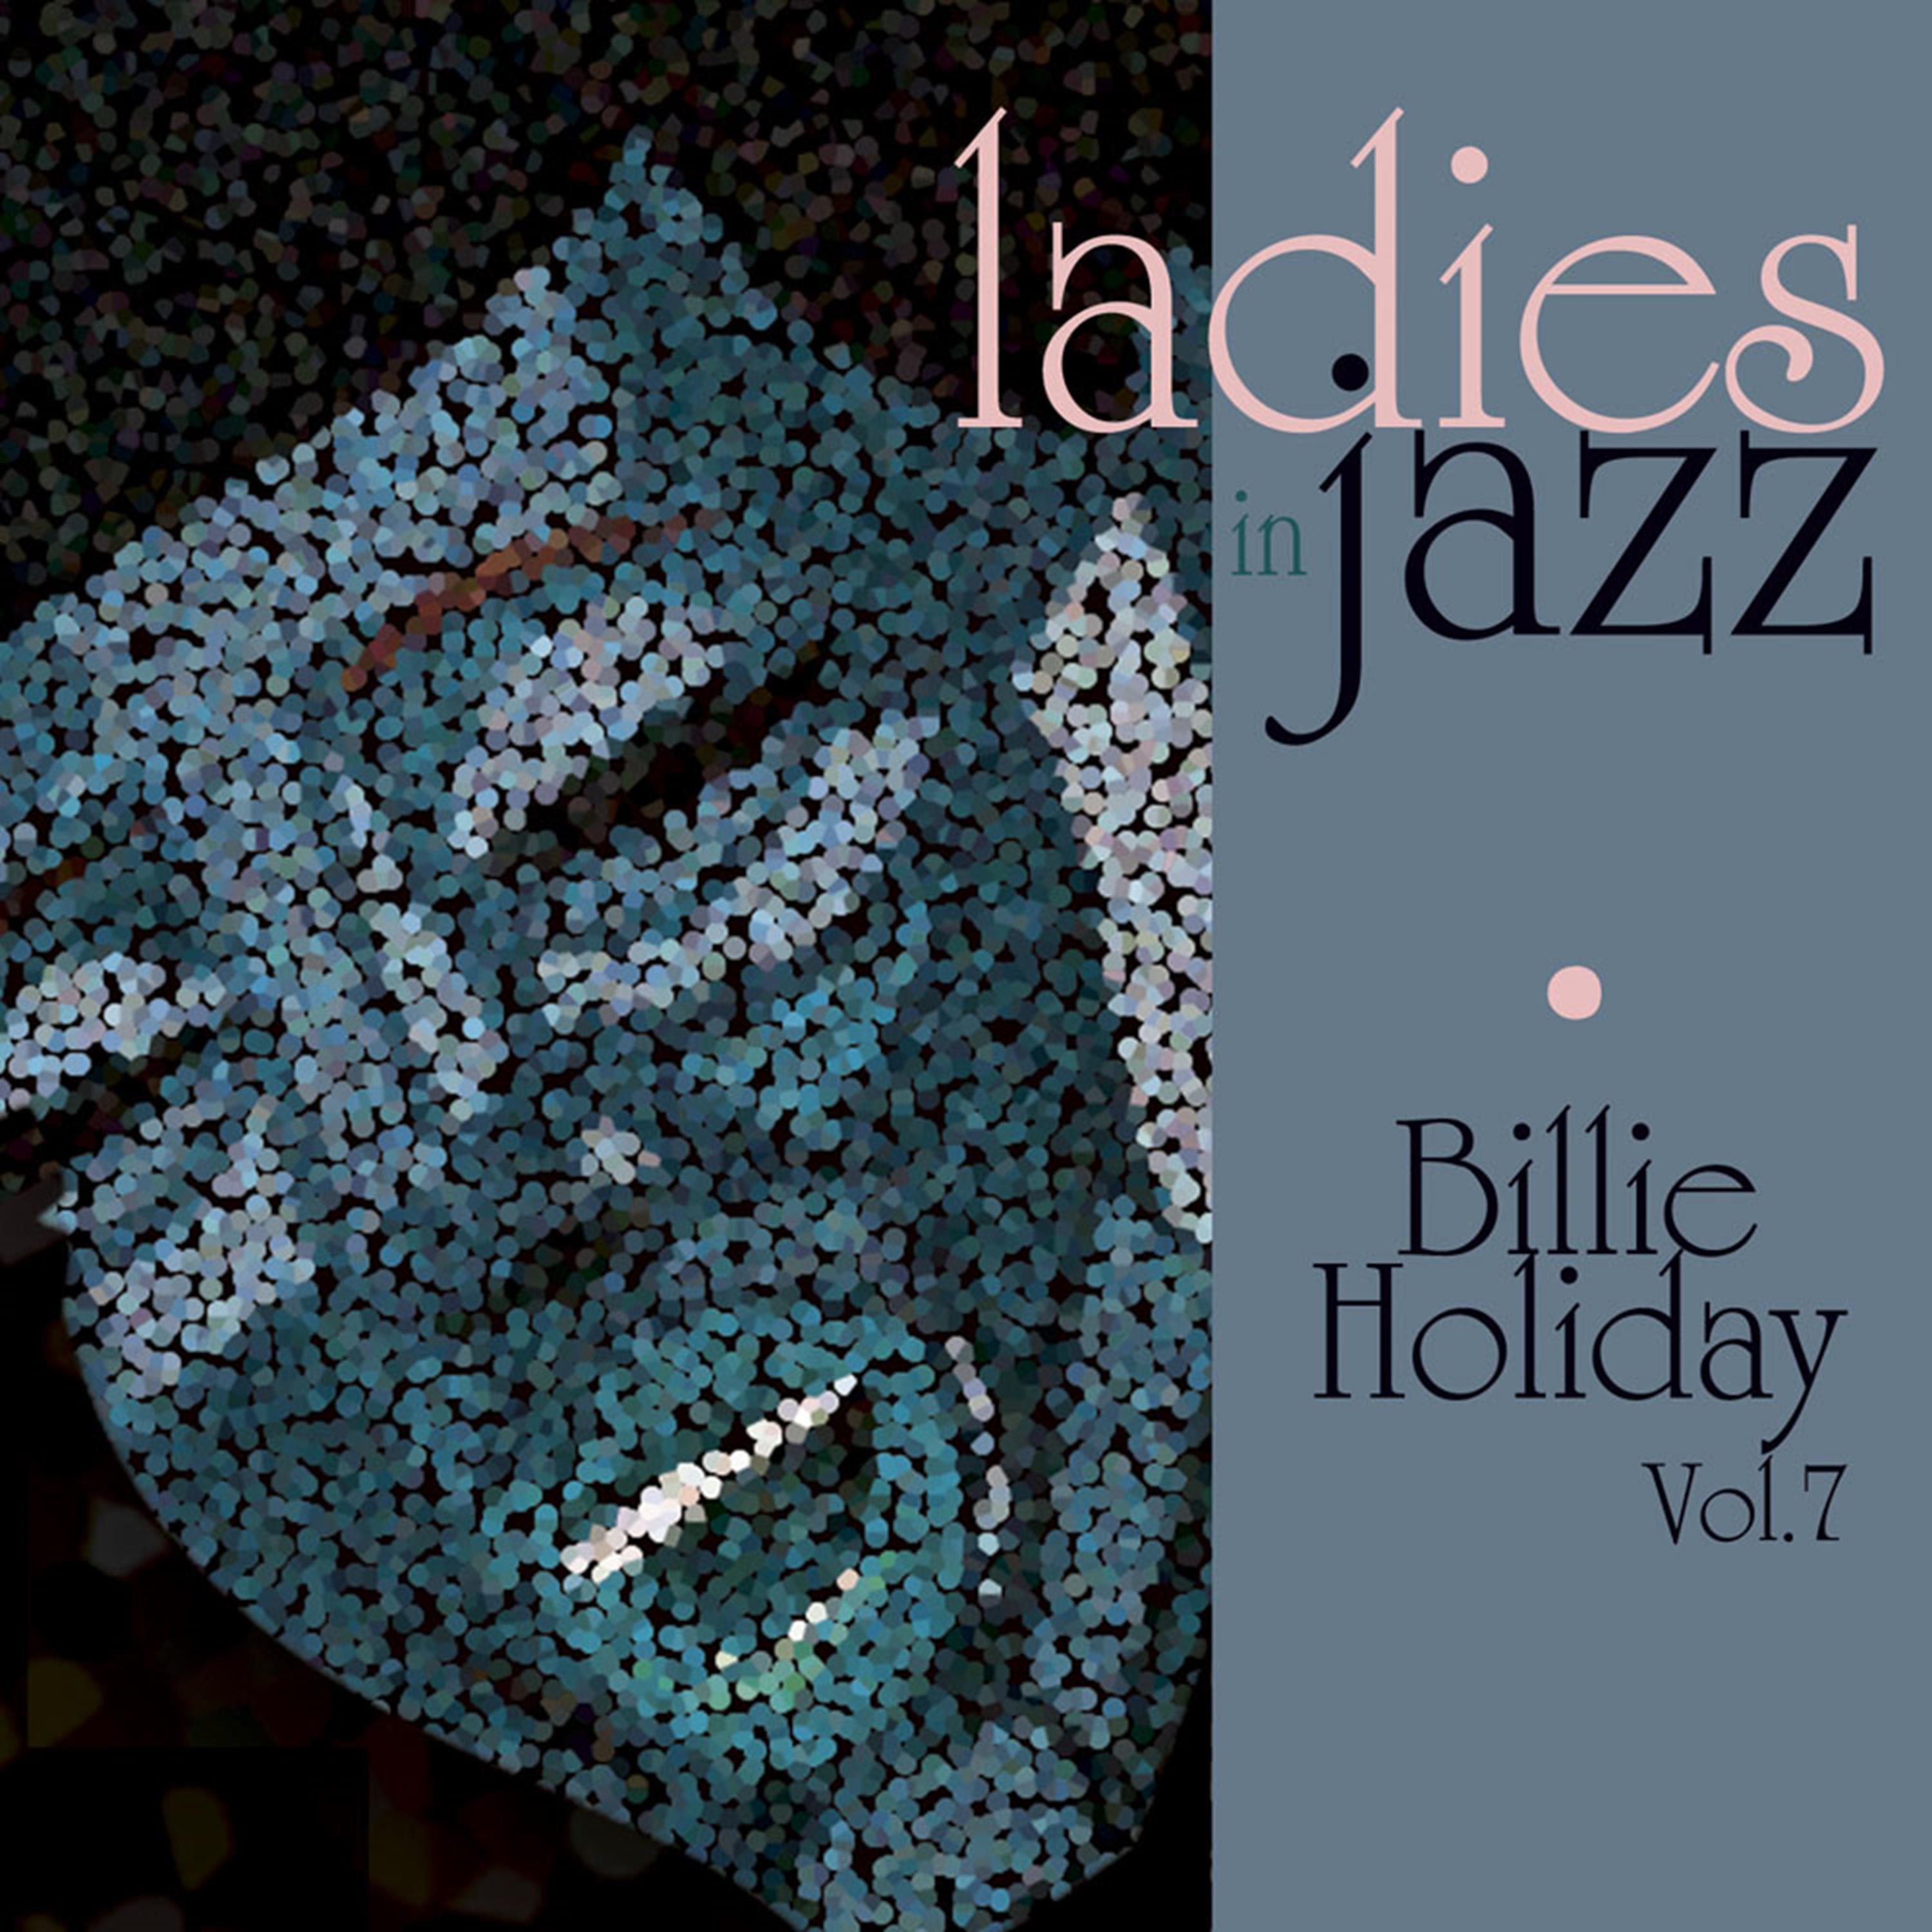 Ladies in Jazz - Billie Holiday, Vol. 7